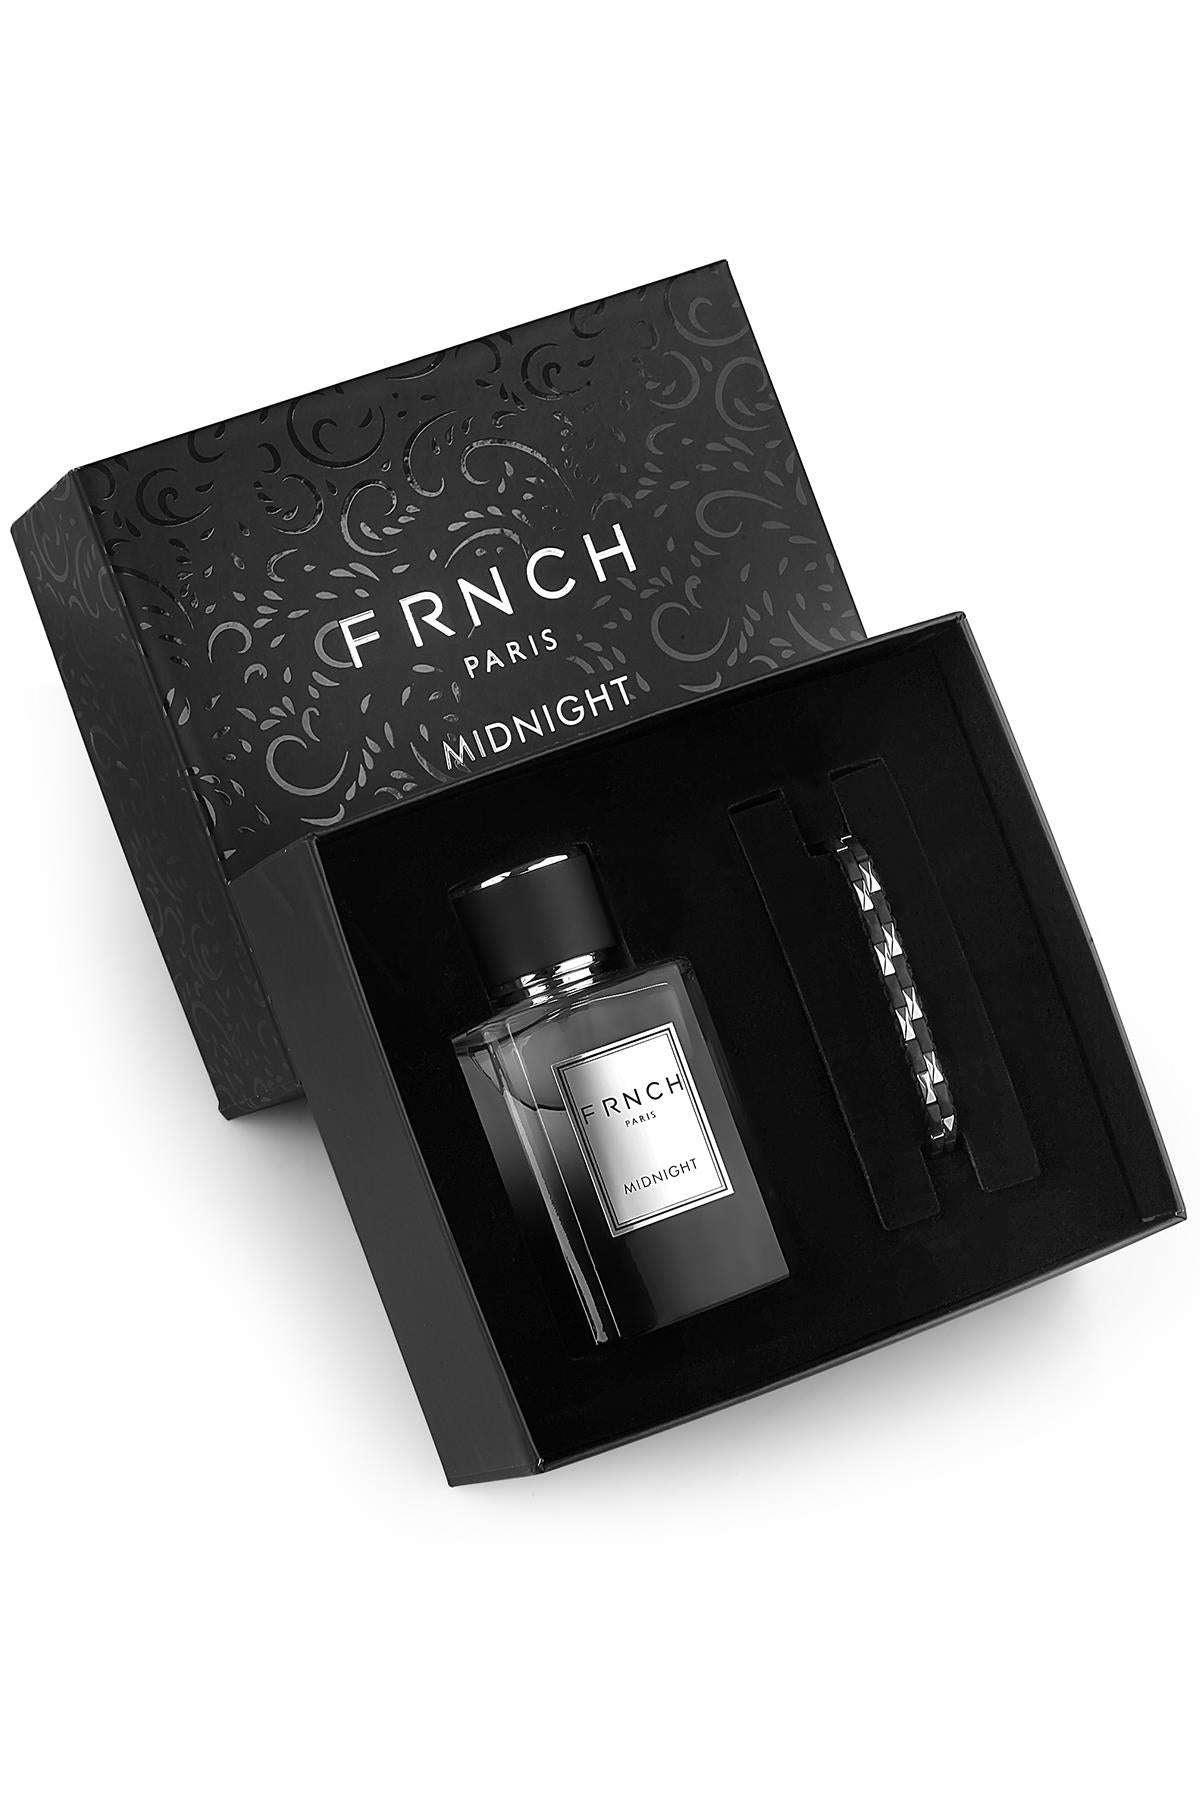 FRNCH Midnight Erkek Parfüm 100 ML Erkek Bileklik Hediyeli FRP10005-105-E